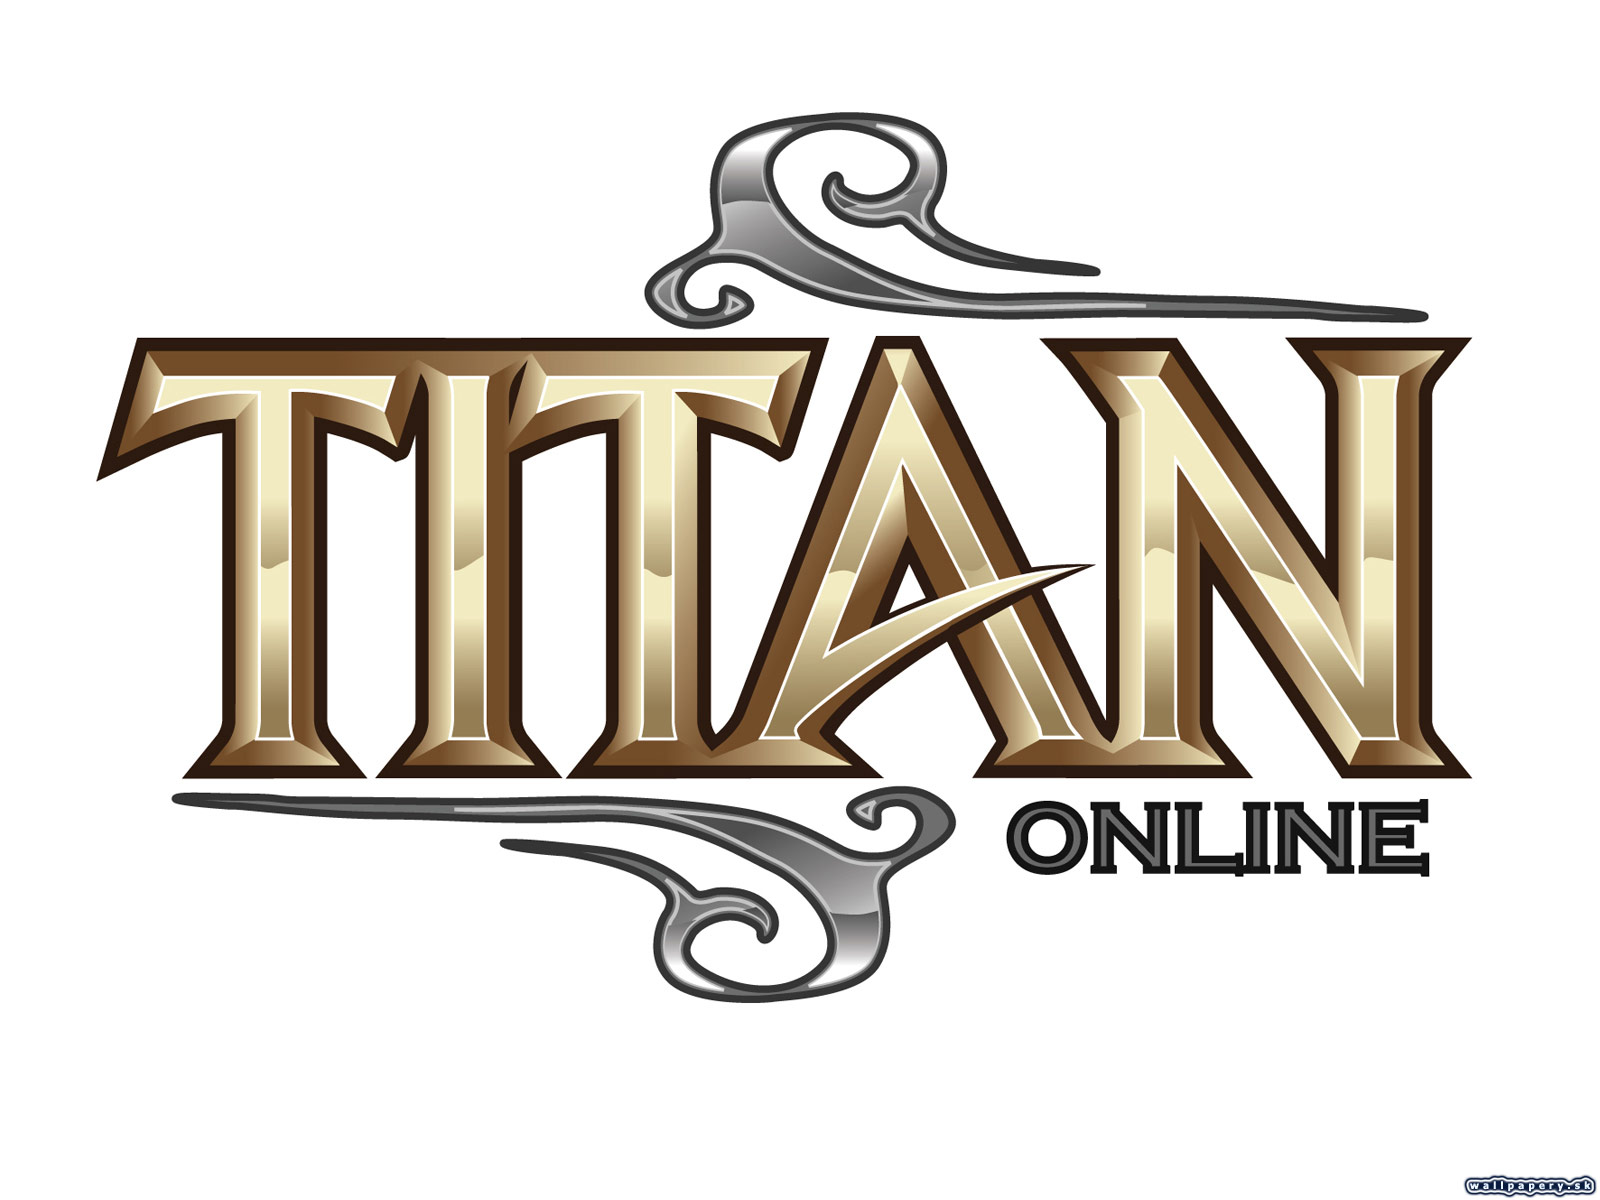 Titan Online - wallpaper 5